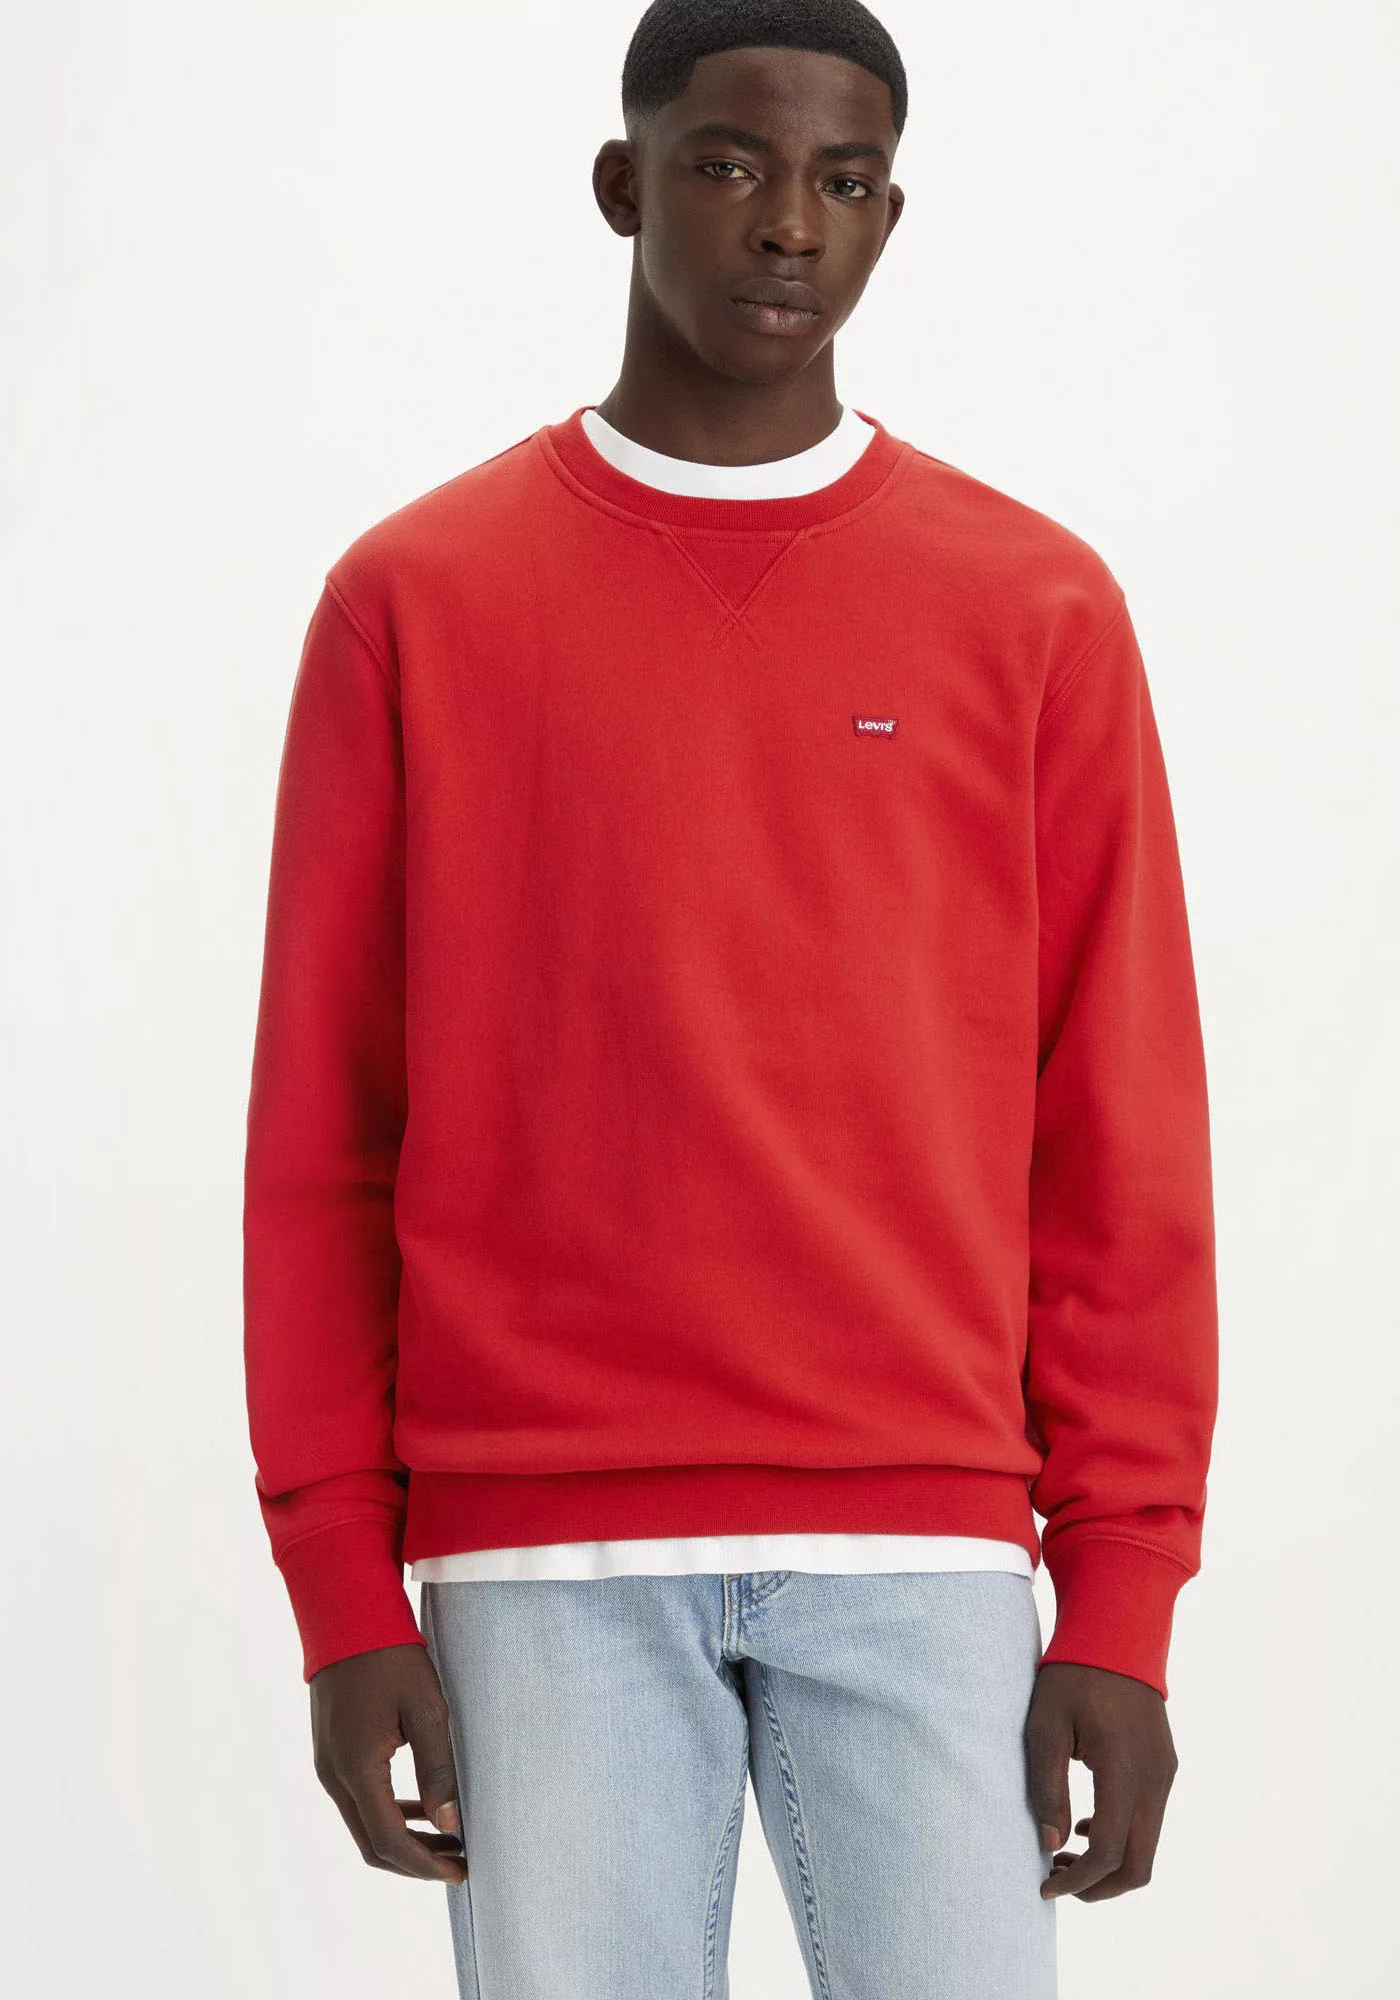 Levis Sweatshirt "SWEATSHIRT NEW ORIGINAL CREW" günstig online kaufen